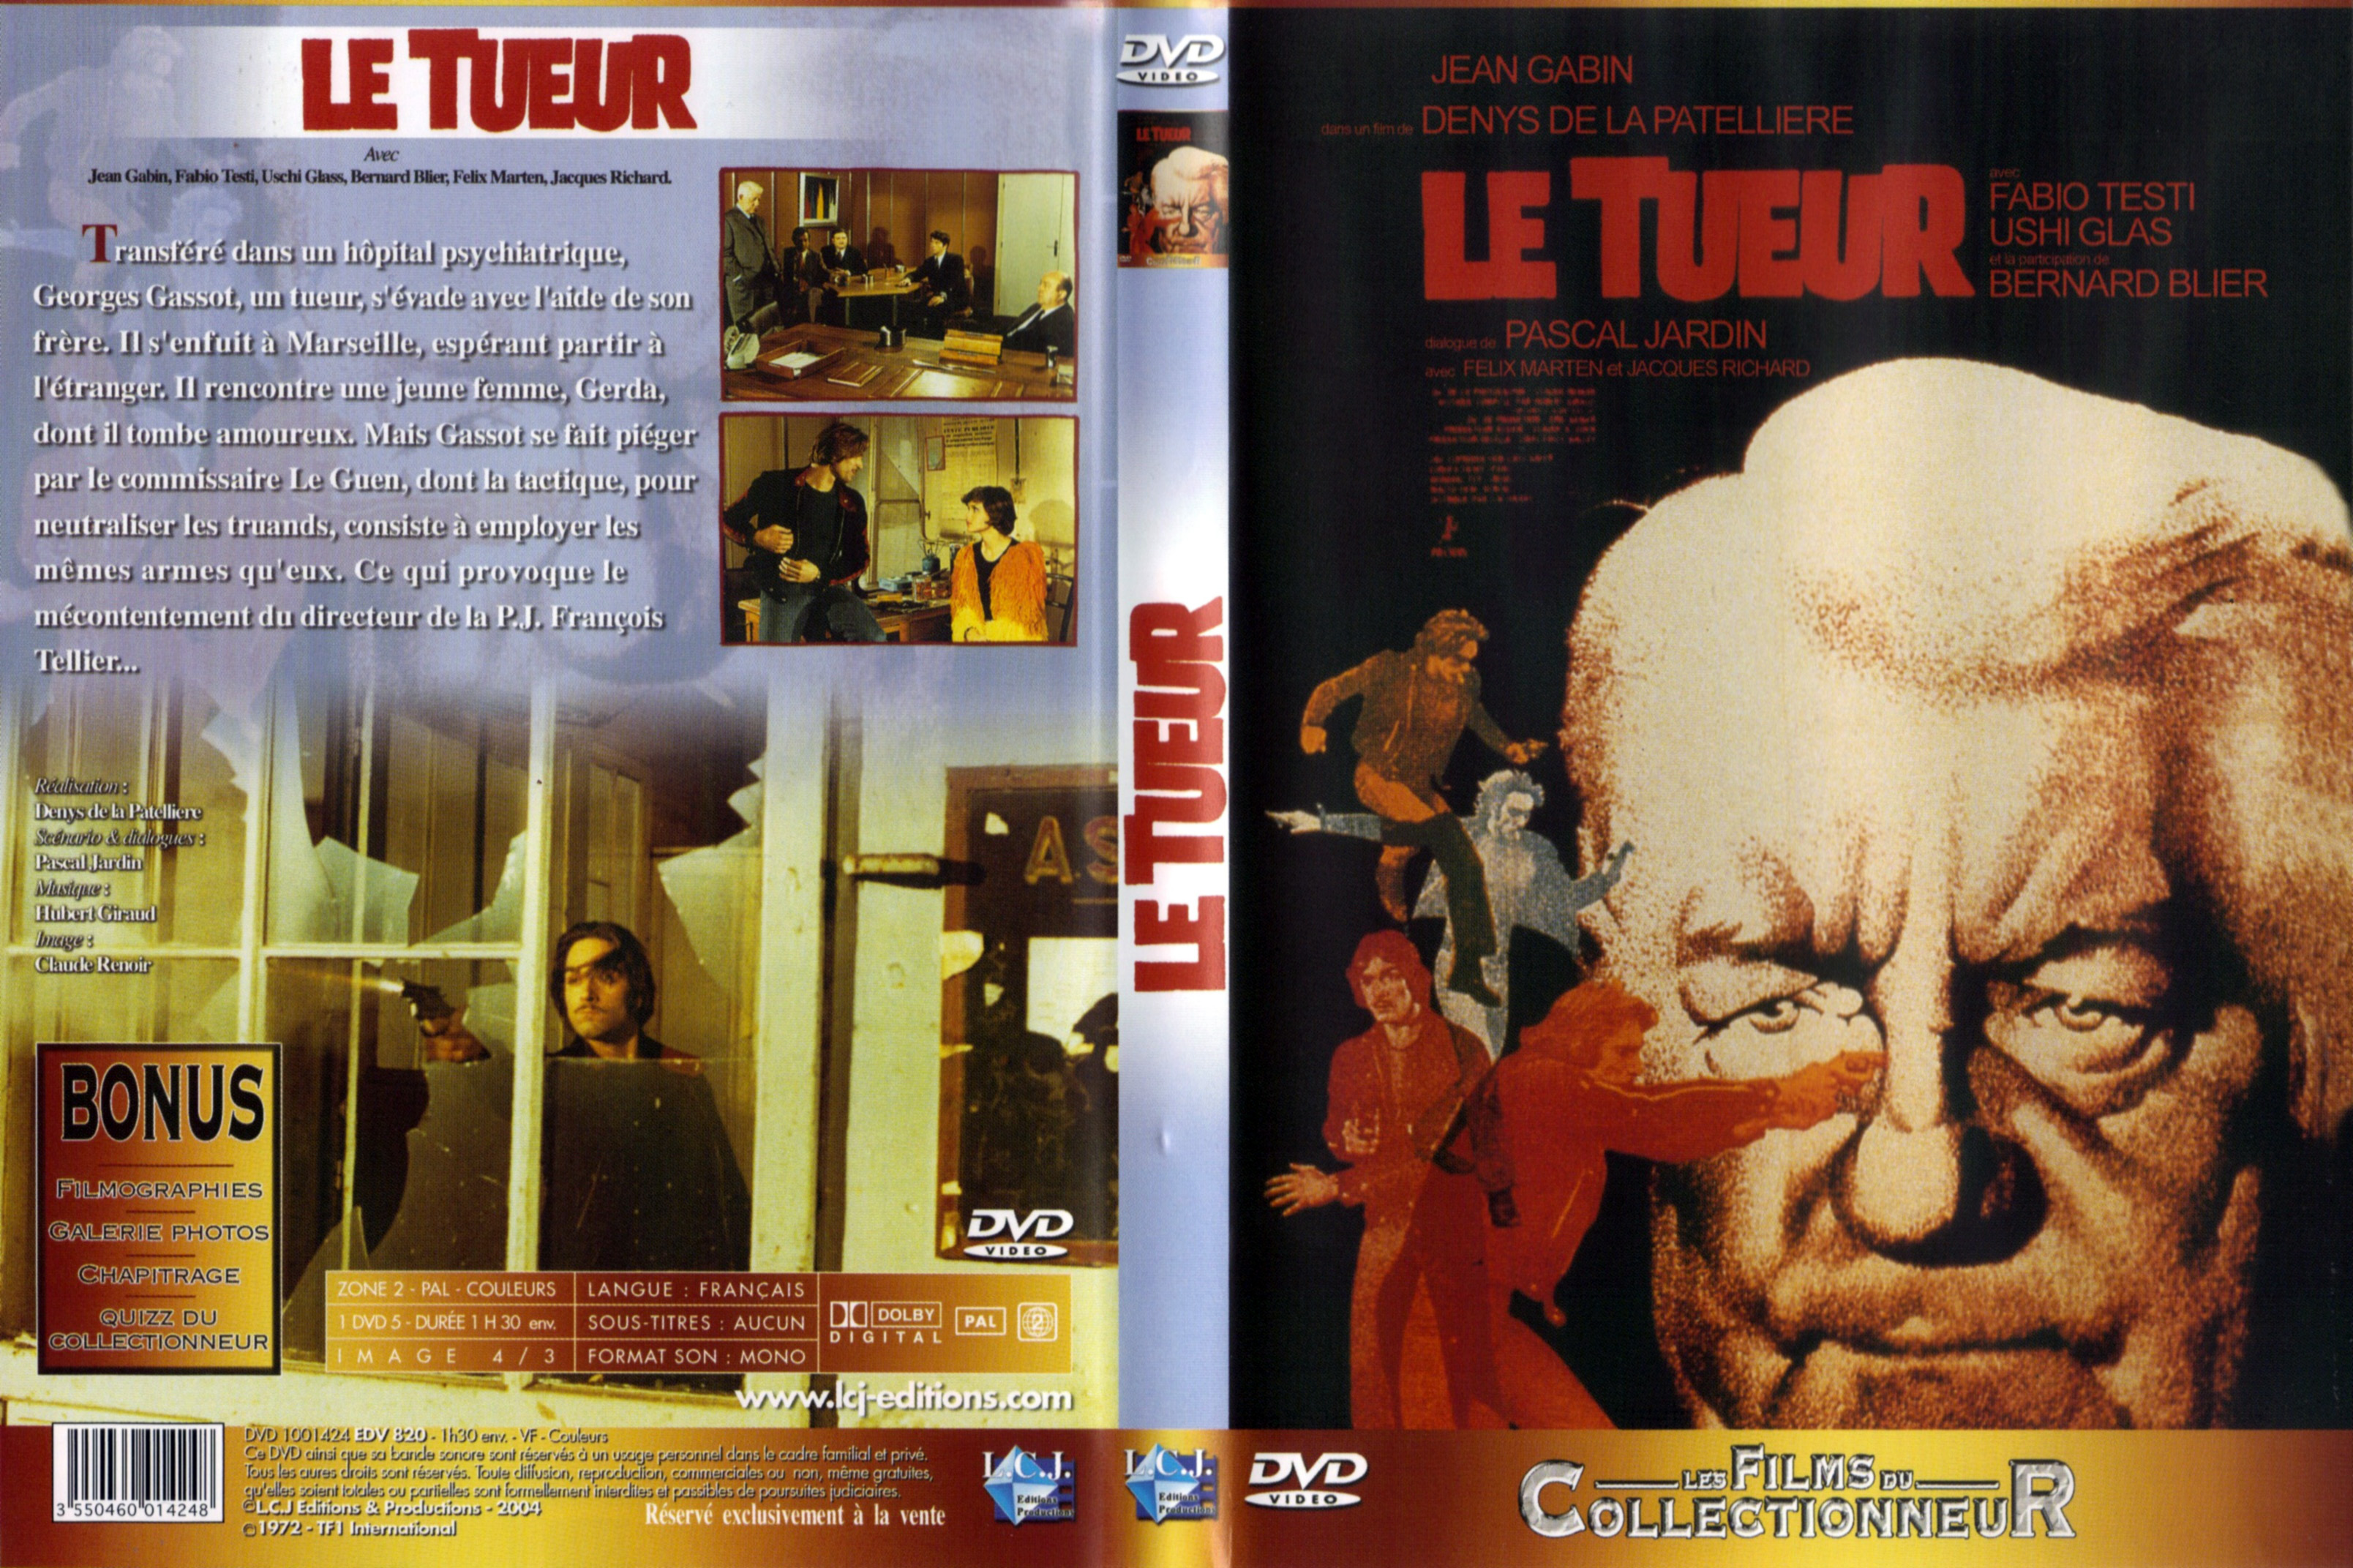 Jaquette DVD Le tueur Jean Gabin v2